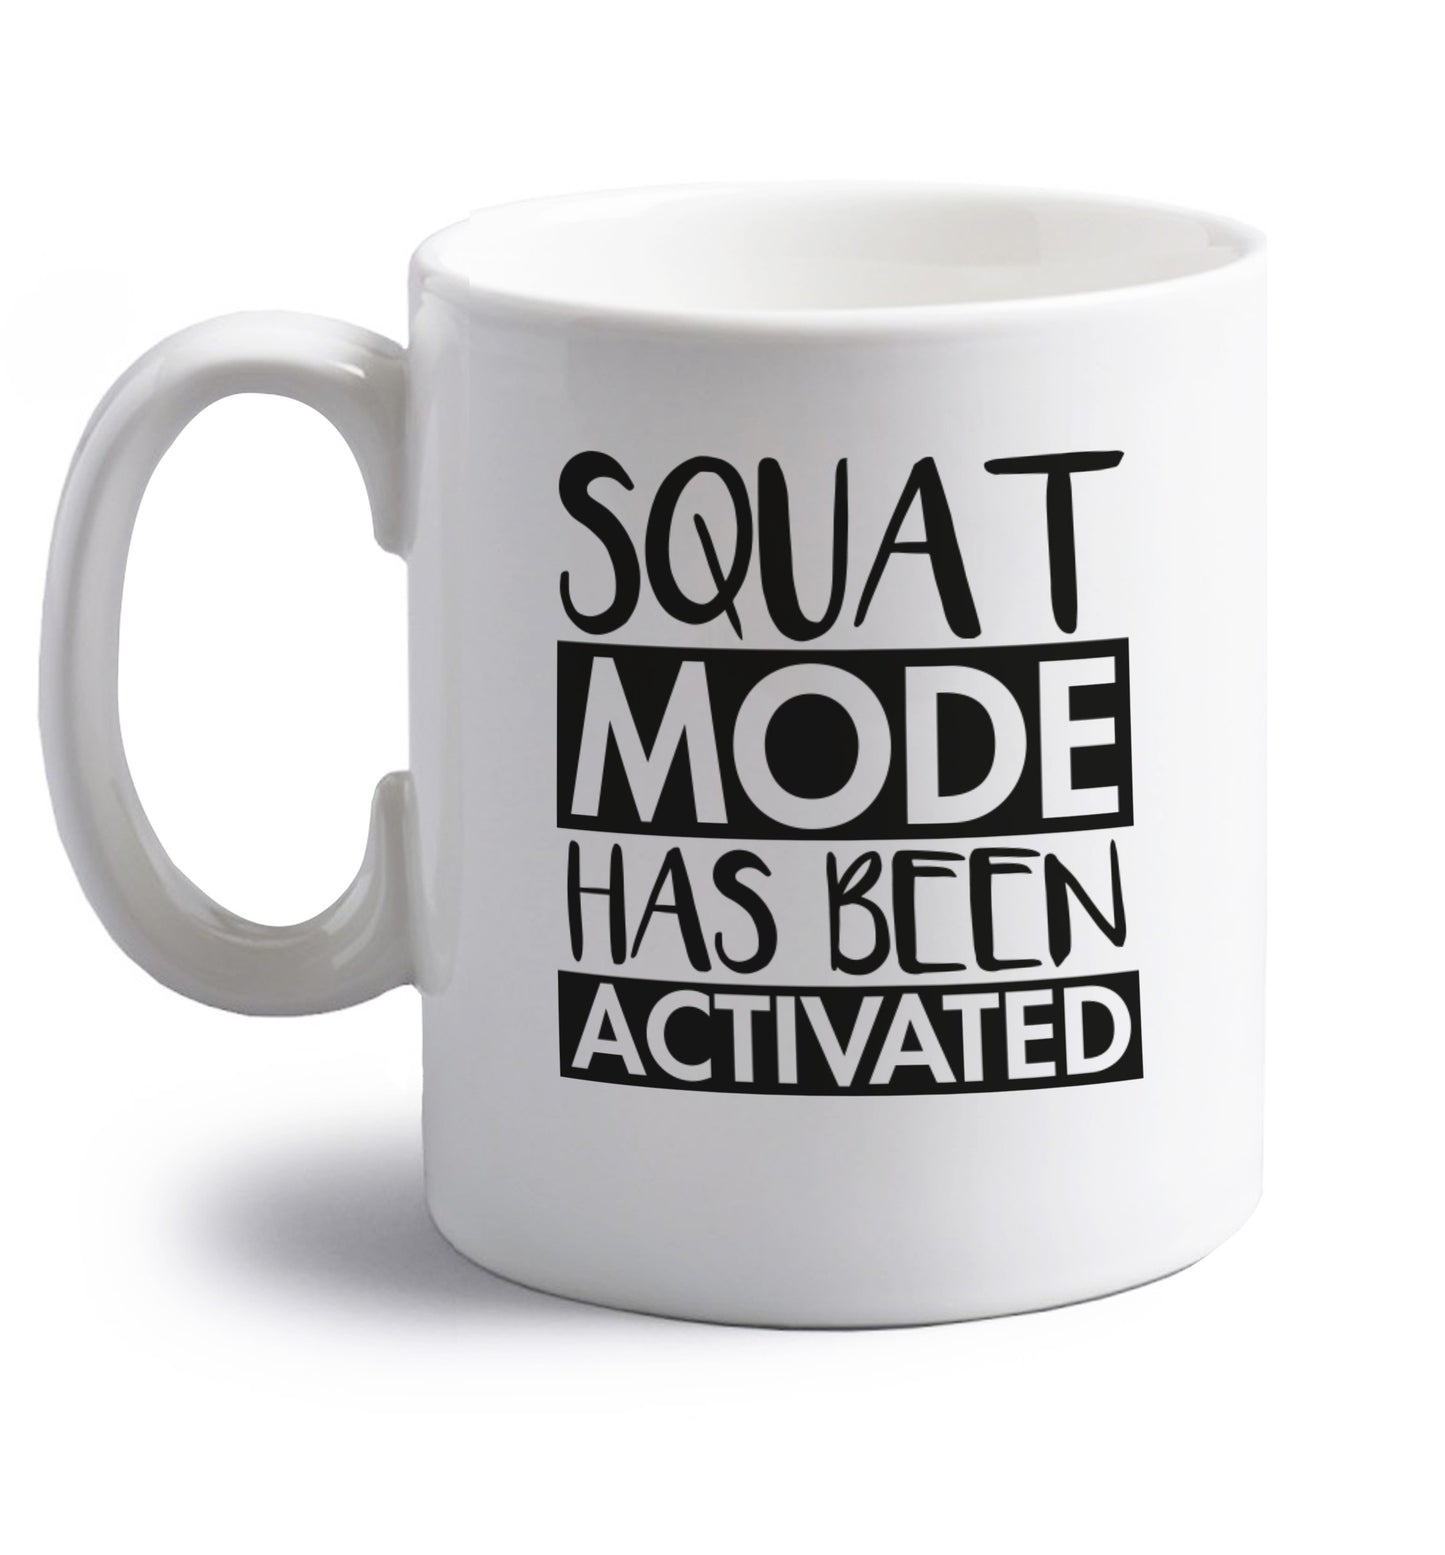 Squat mode activated right handed white ceramic mug 